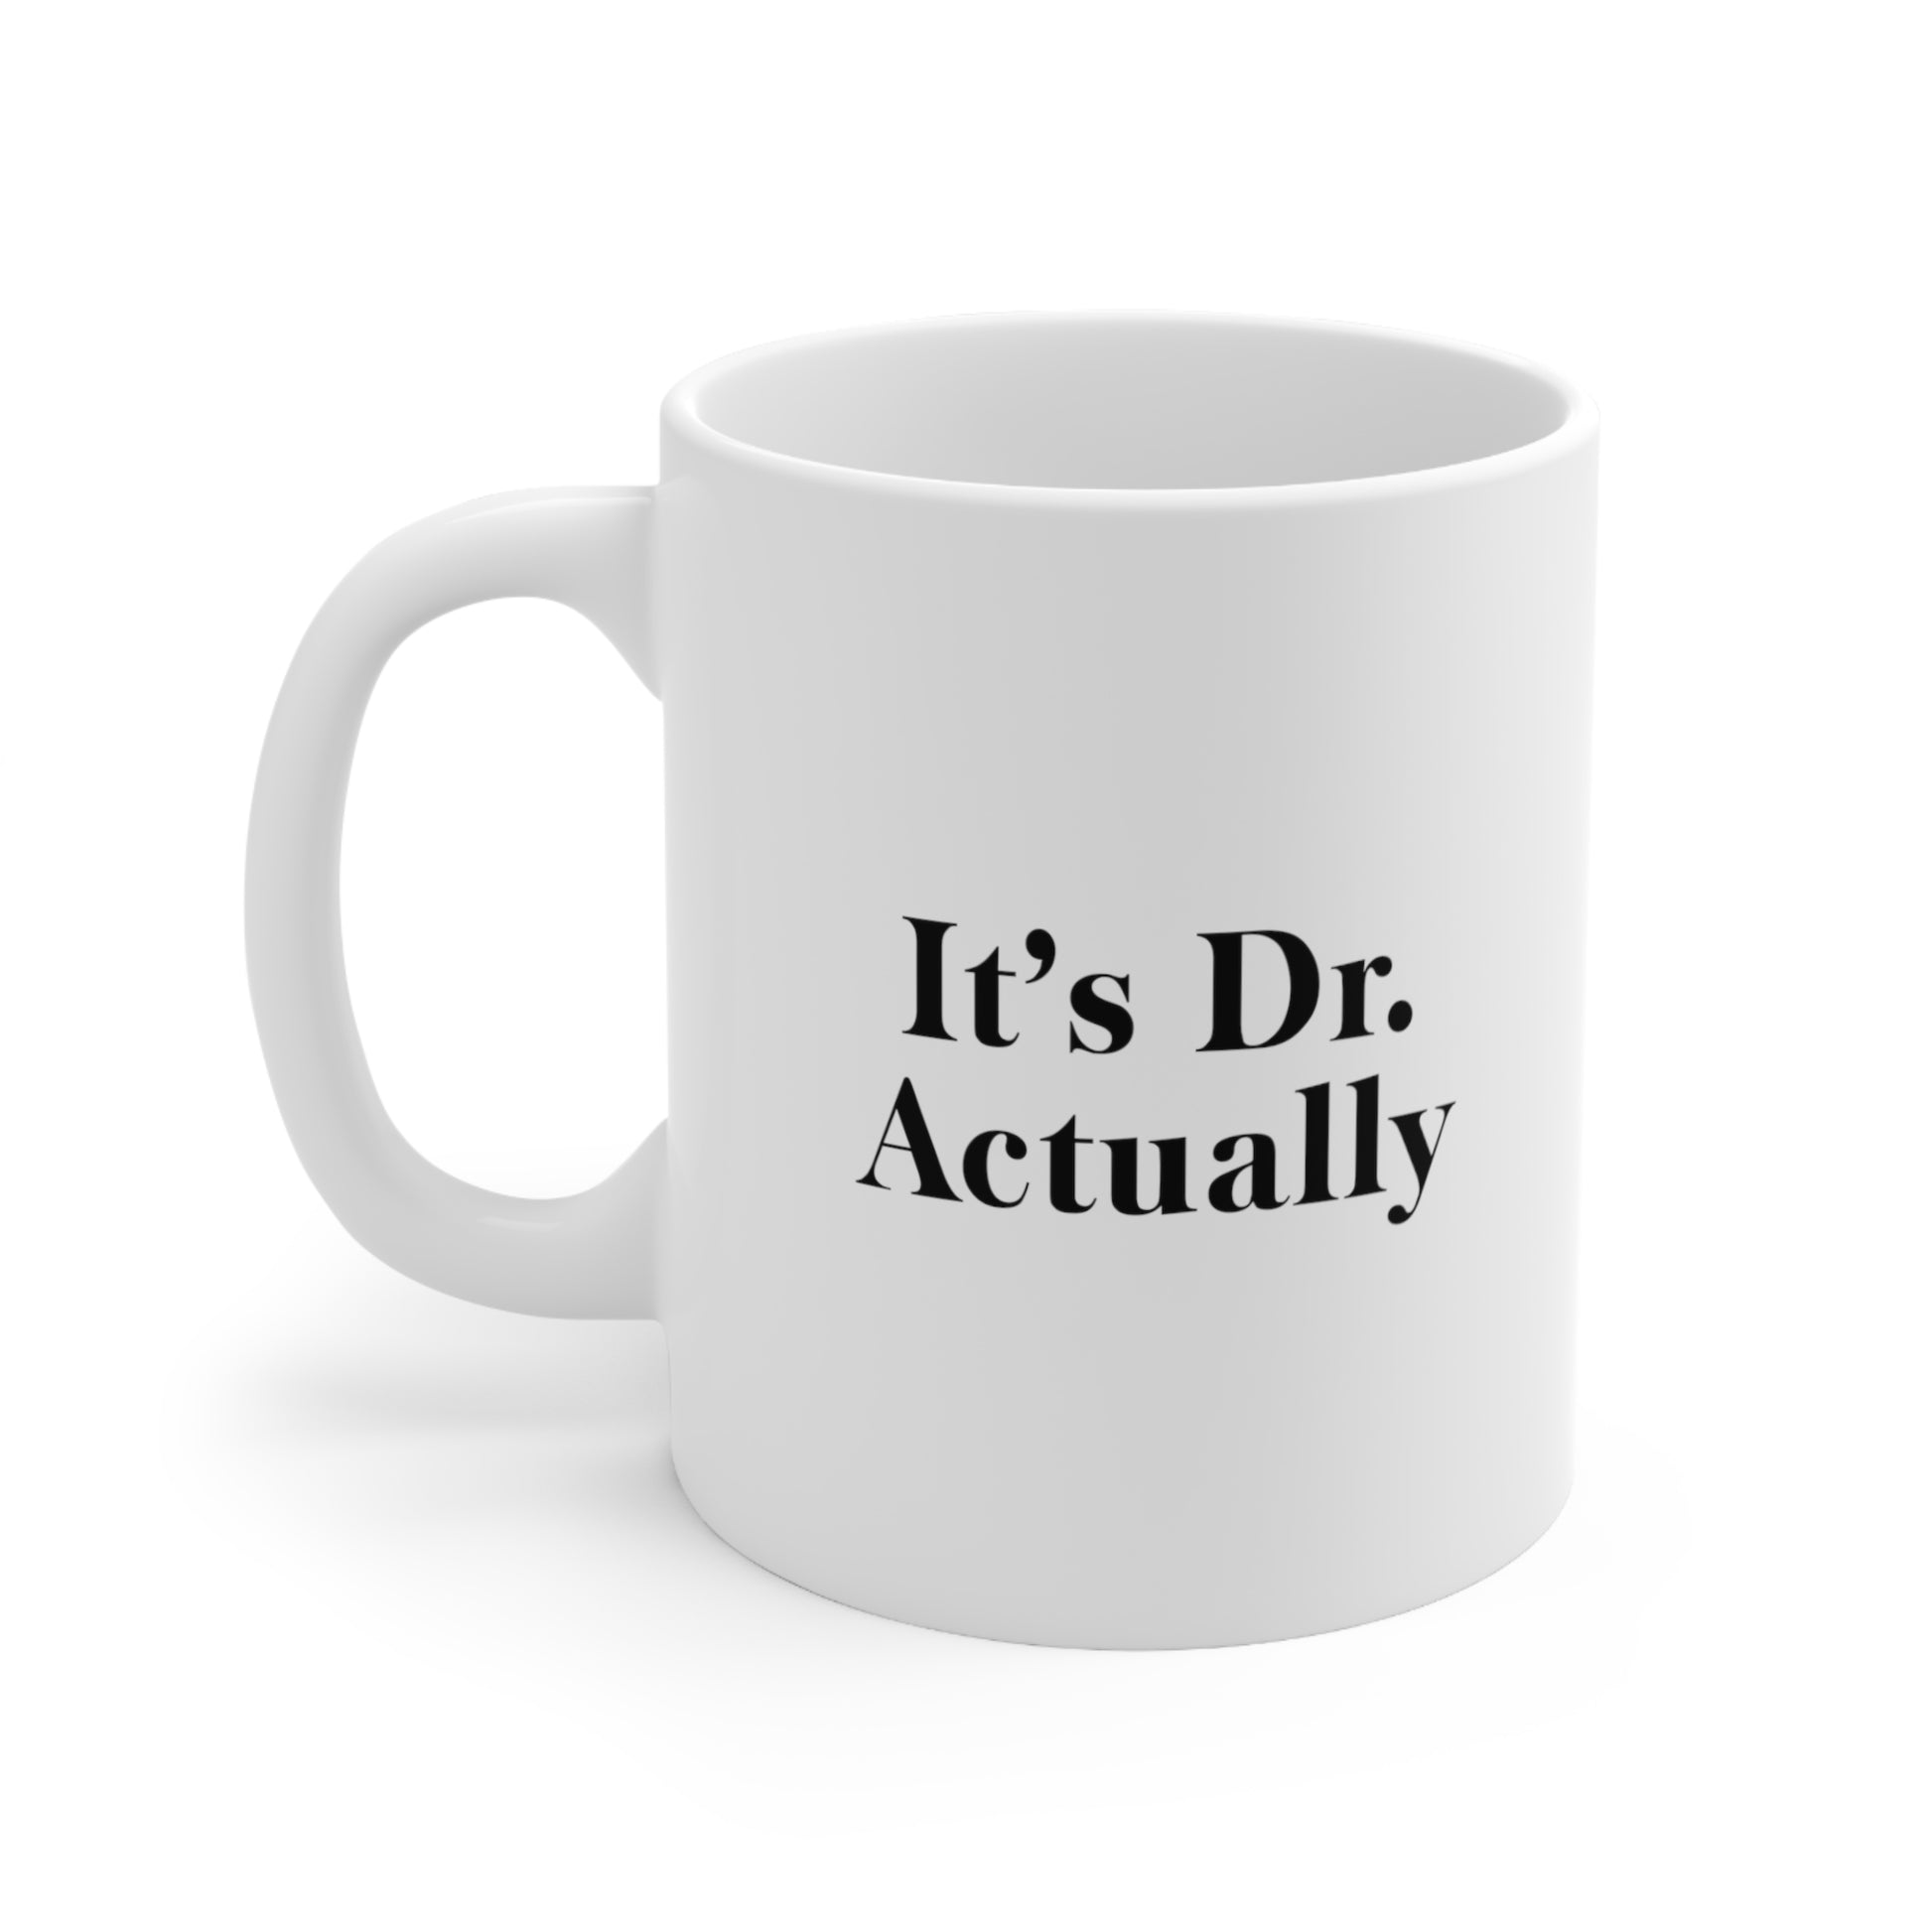 It's Dr Actually Coffee Mug